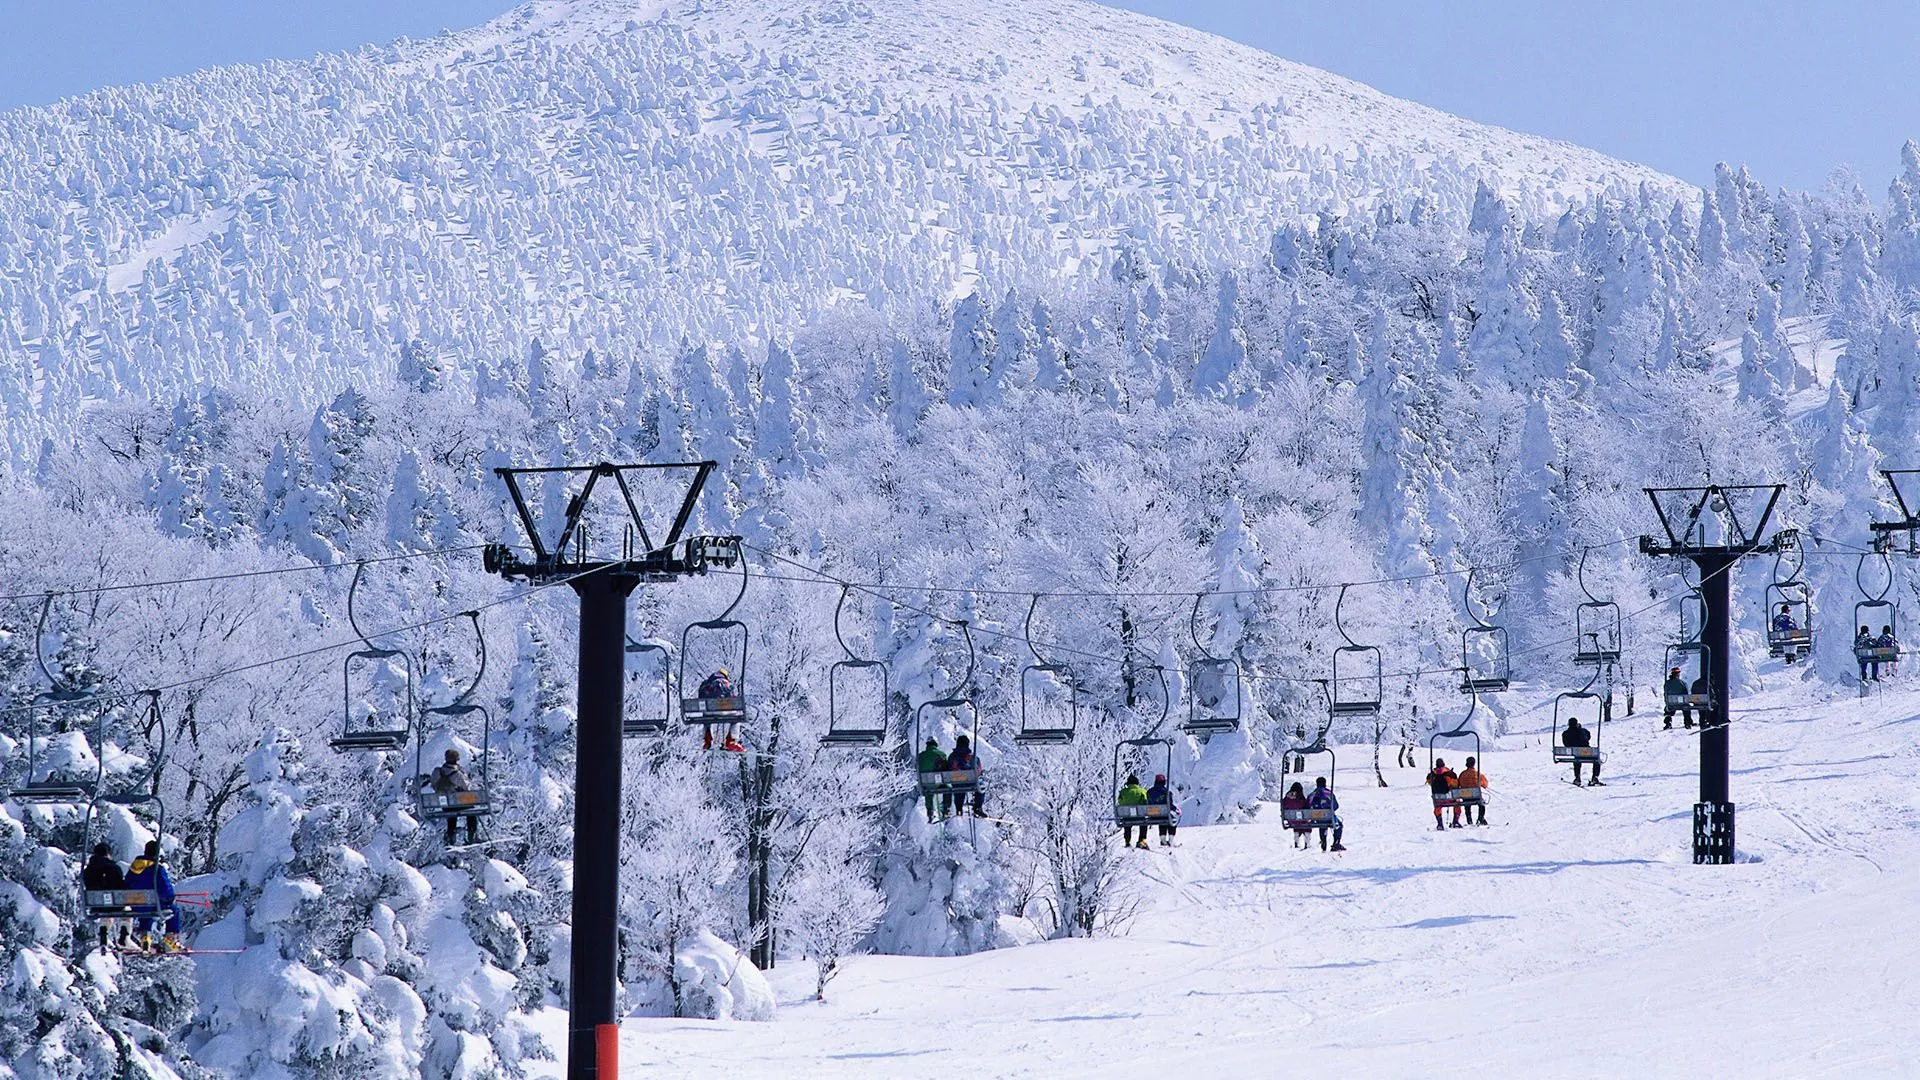 Chepelare in Bulgaria, Europe | Snowboarding,Skiing - Rated 3.9